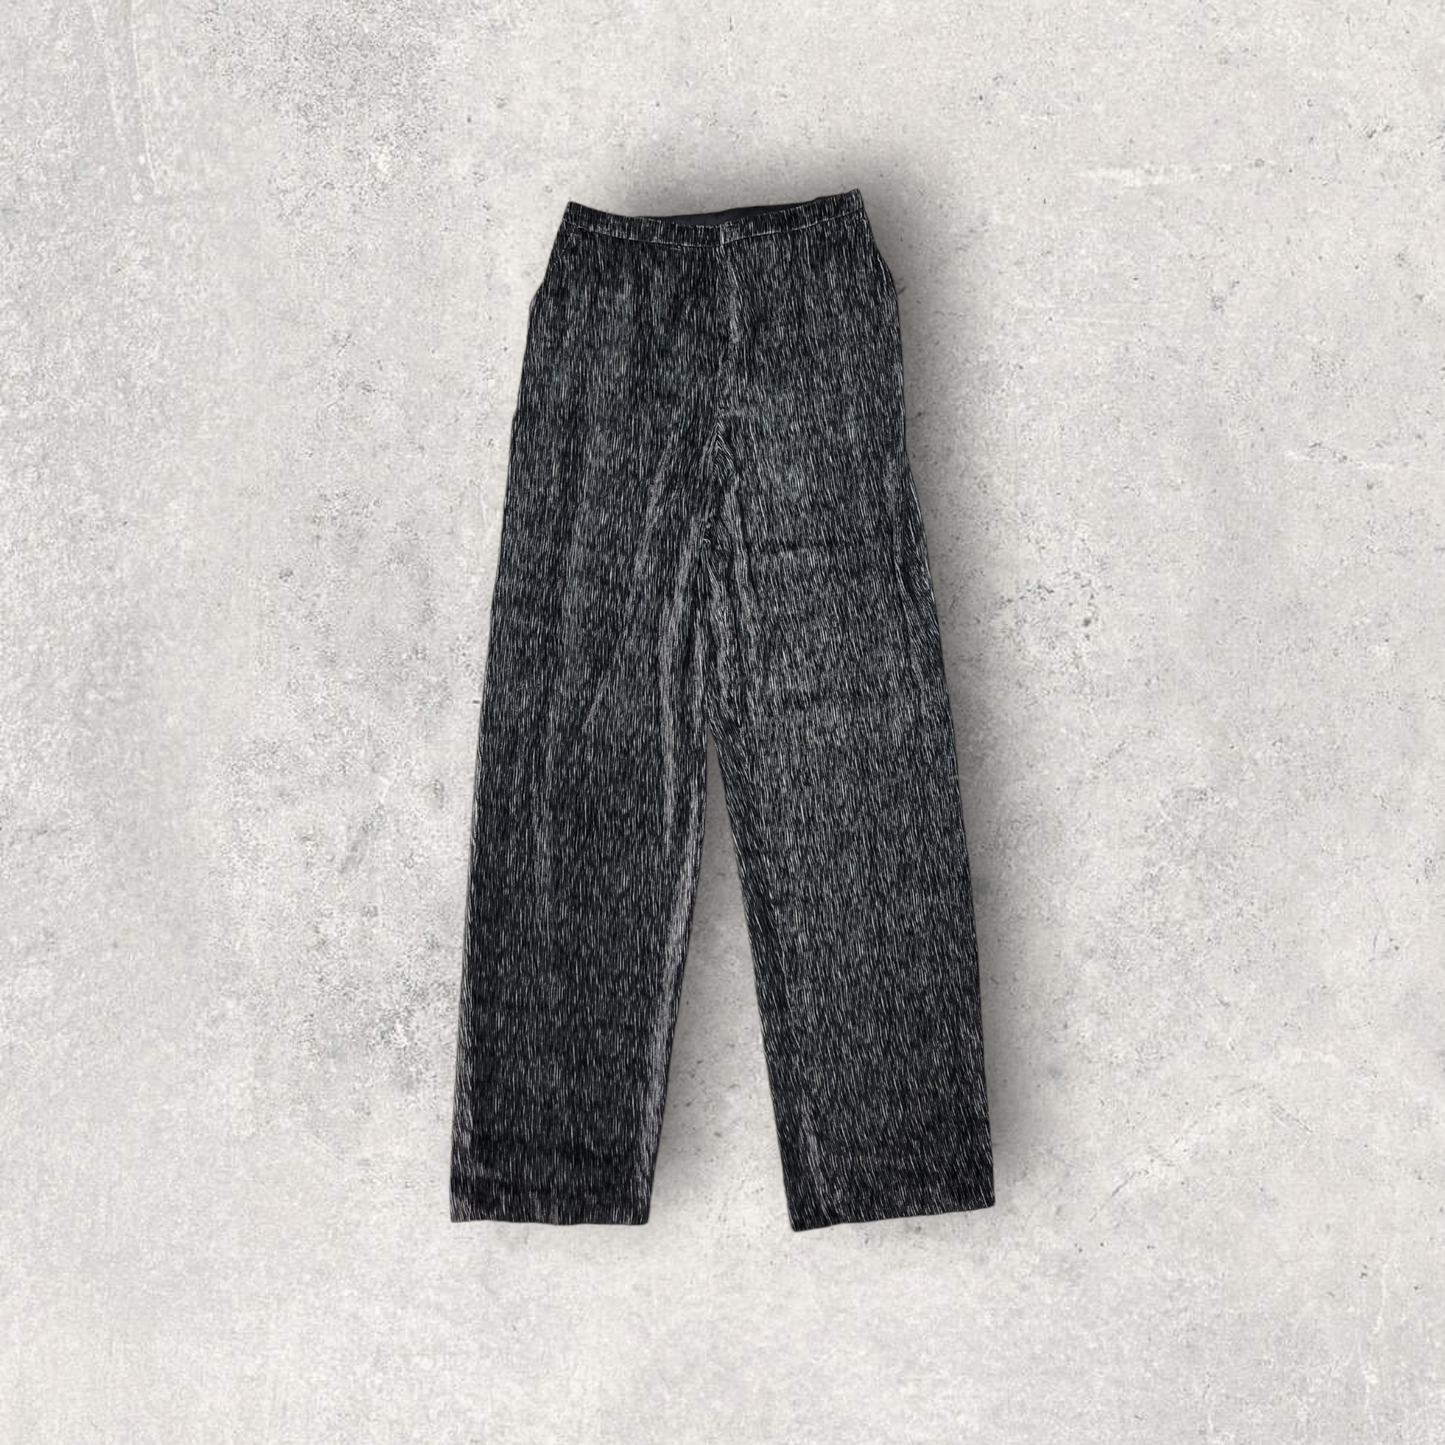 Pants Designer By Armani Collezoni  Size: 6